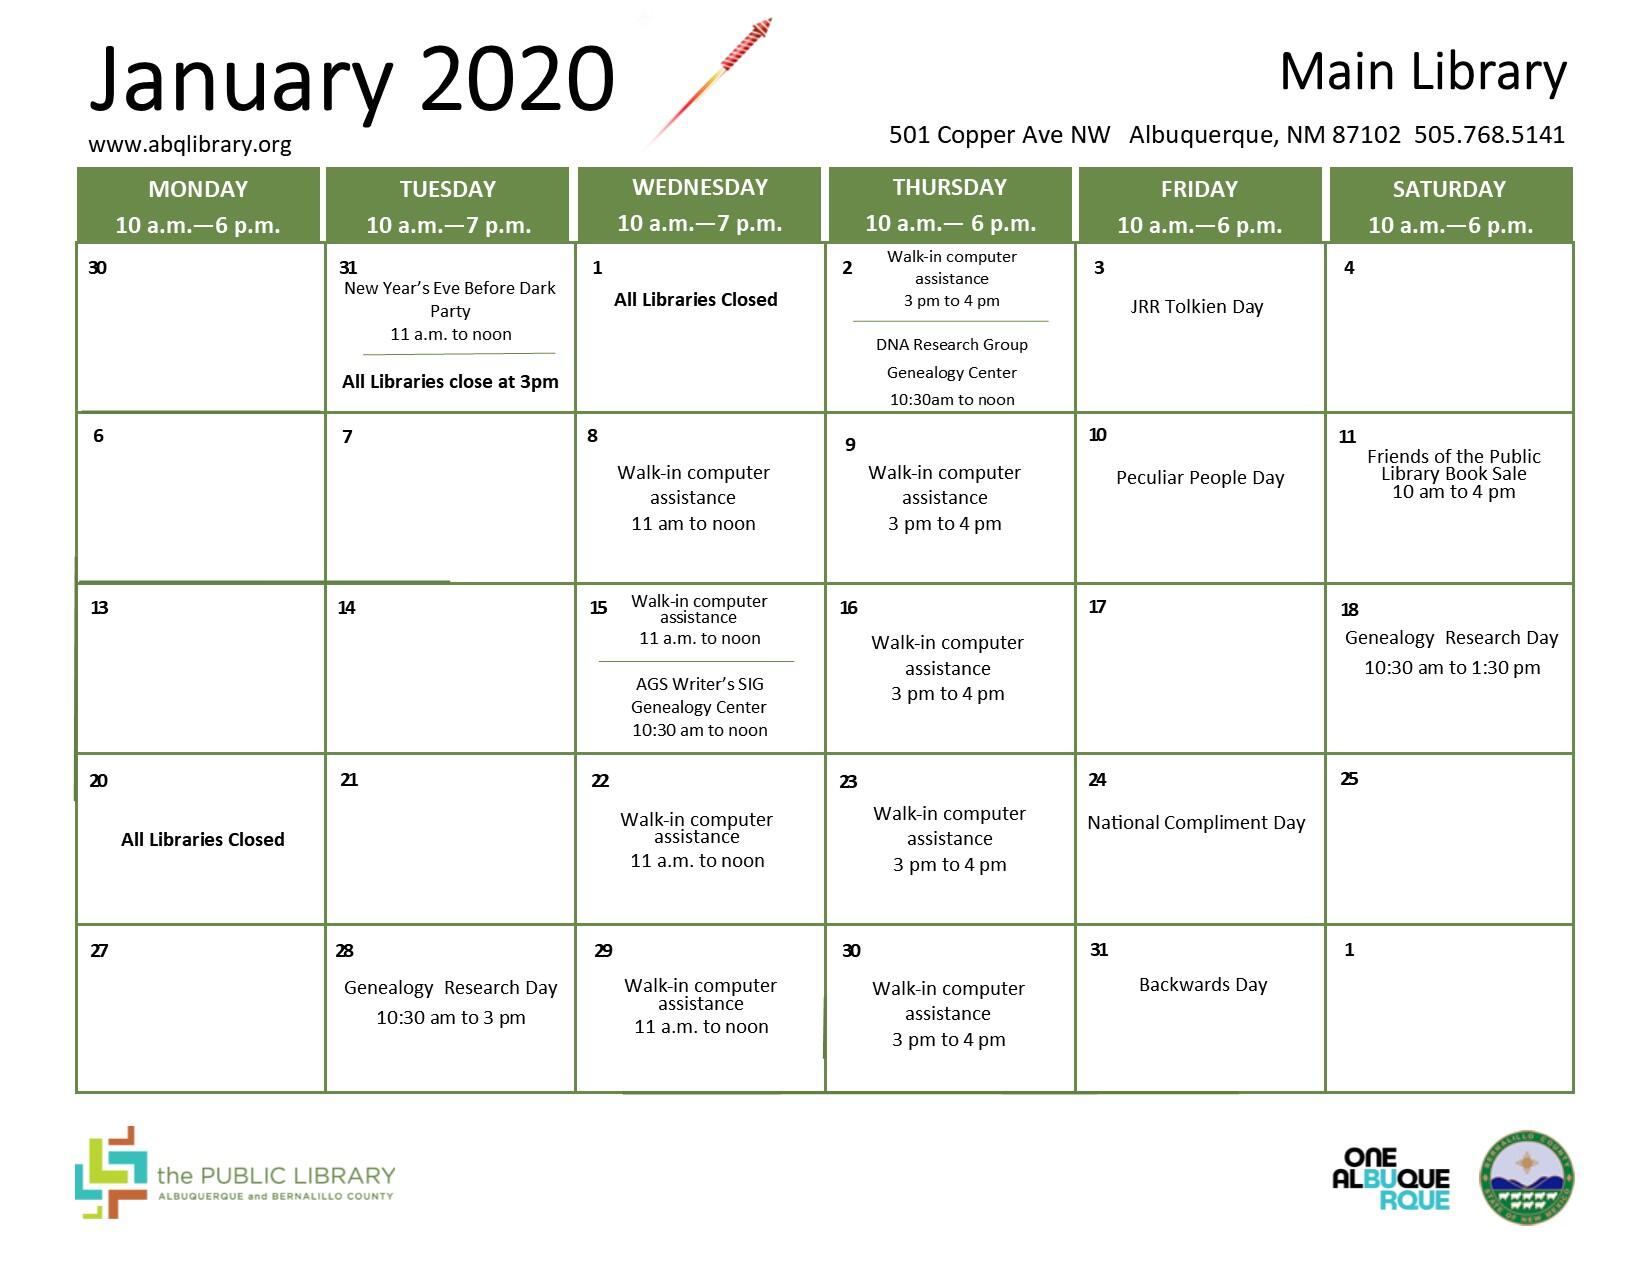 Main Library, January 2020 Calendar & Programs (City of Albuquerque